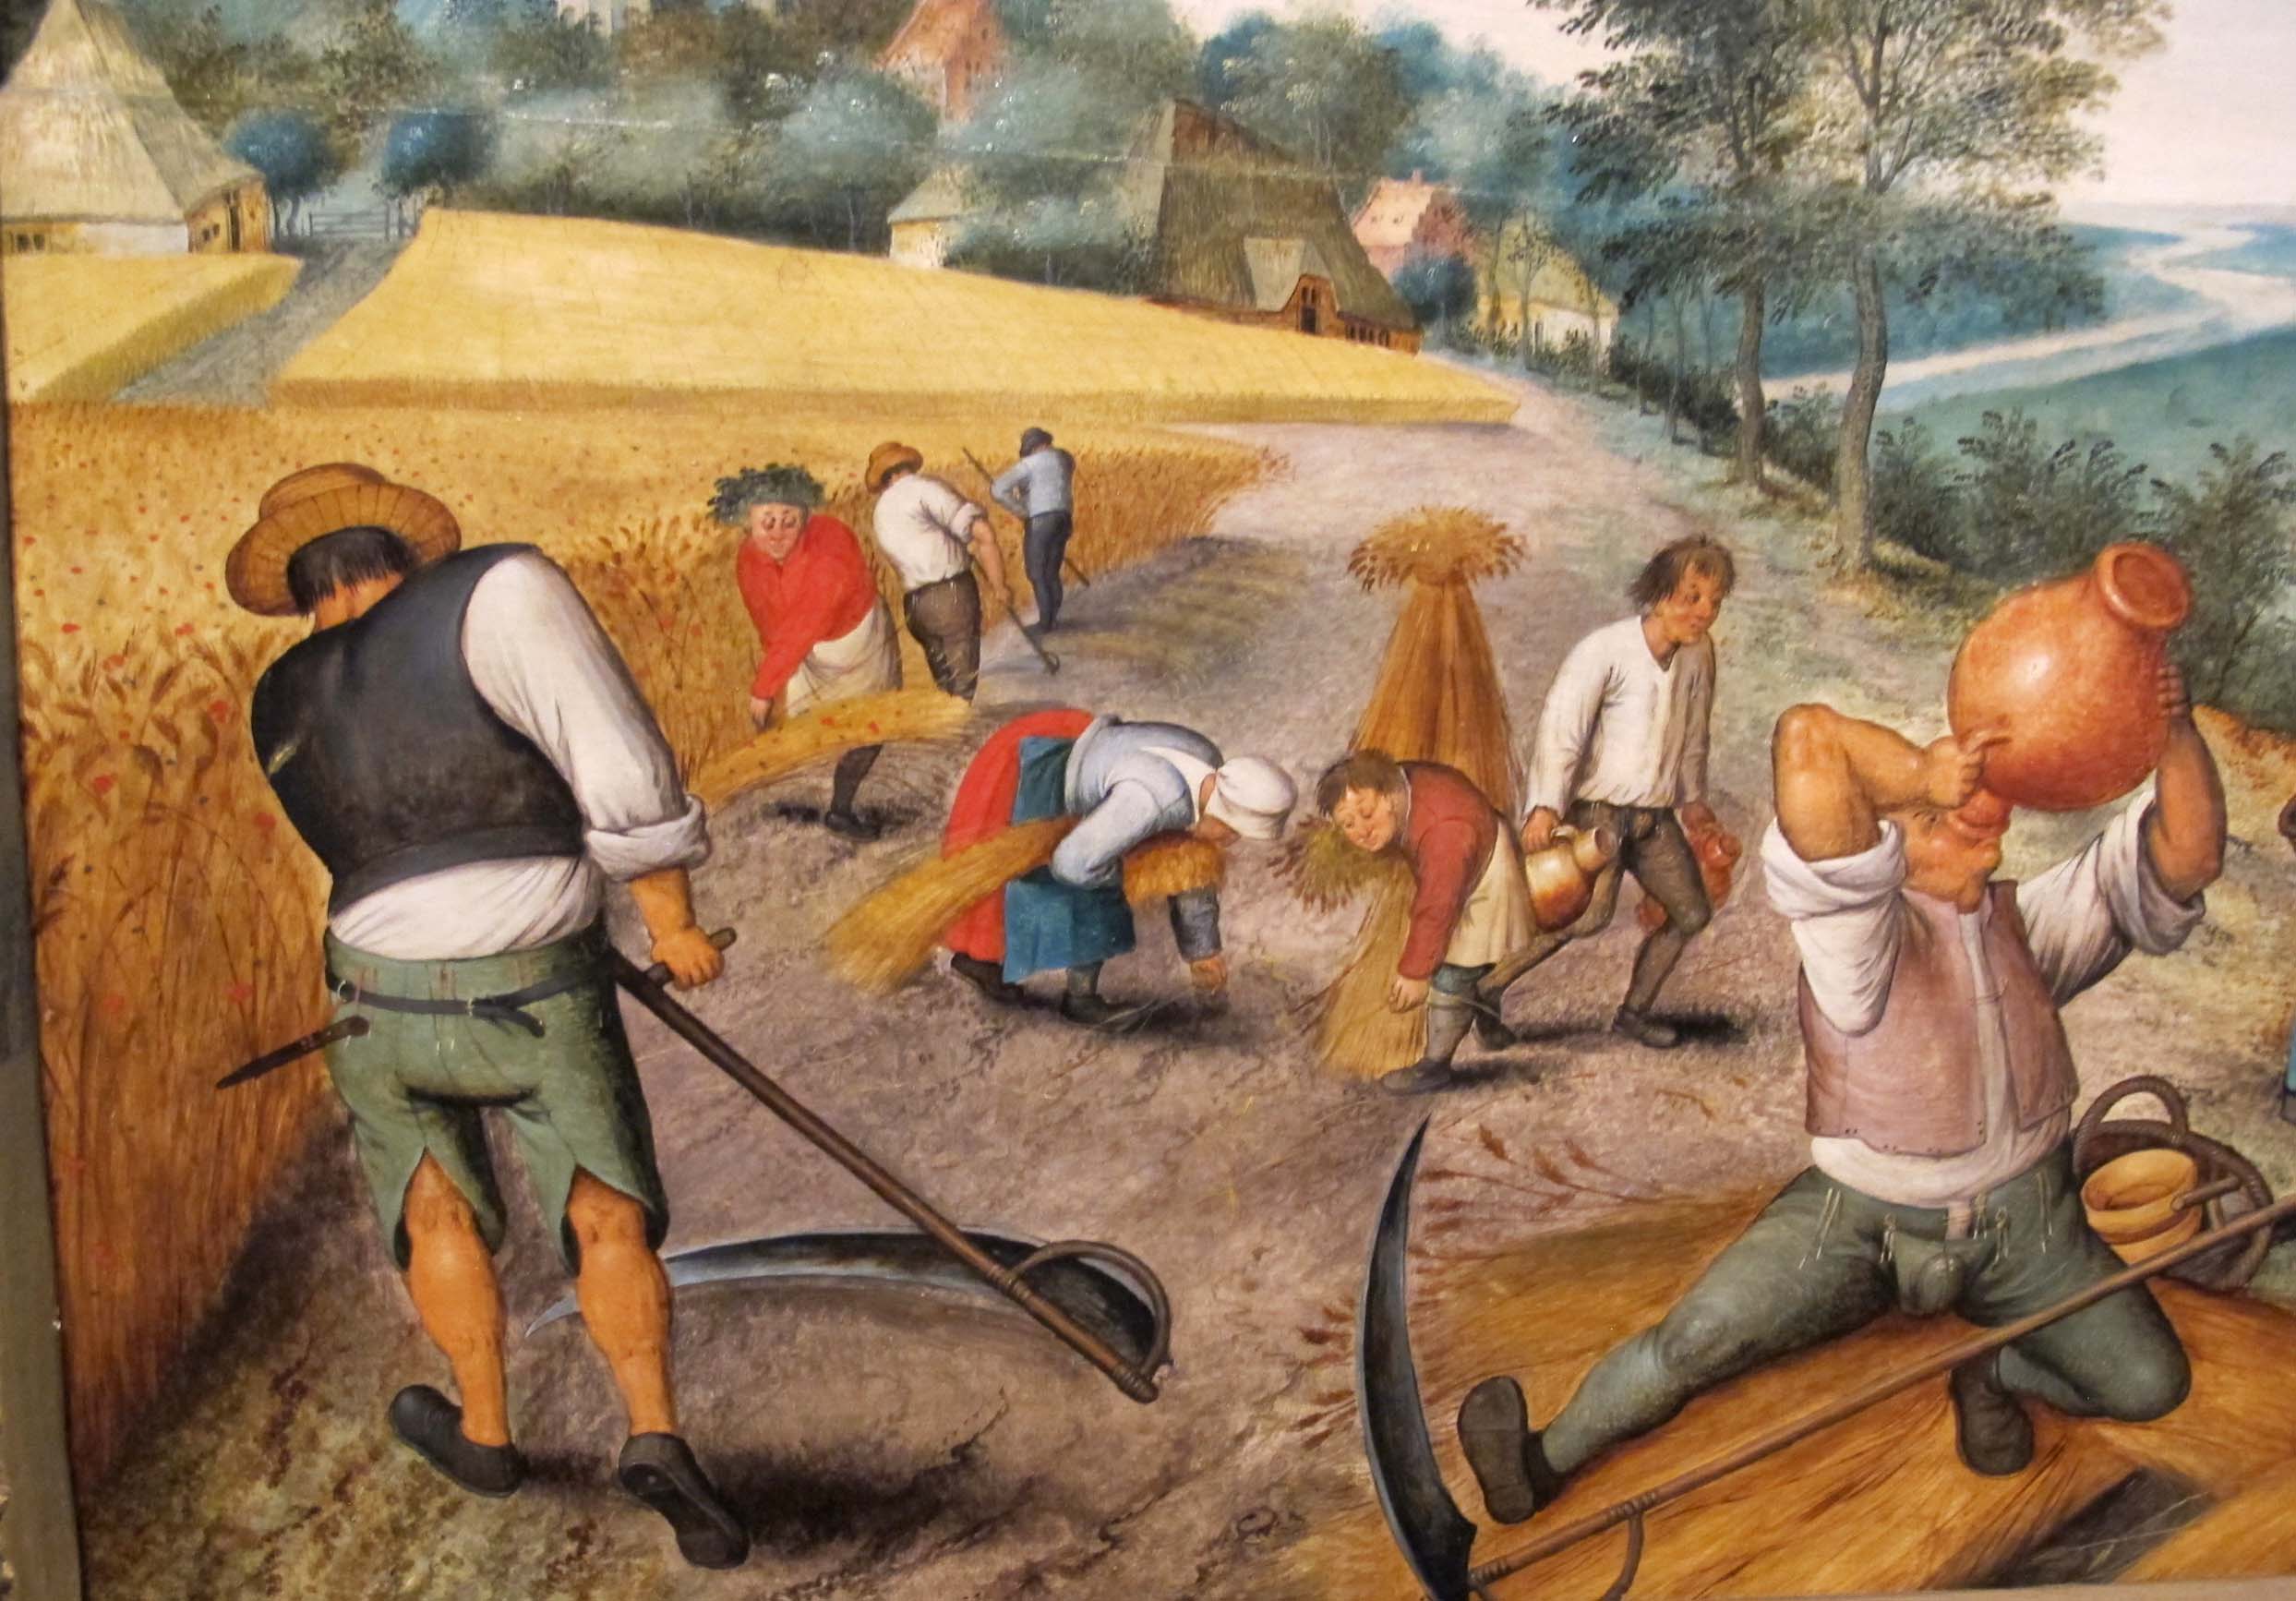 Peasants harvesting crops, by Flemish artist Pieter Brueghel, 17th century